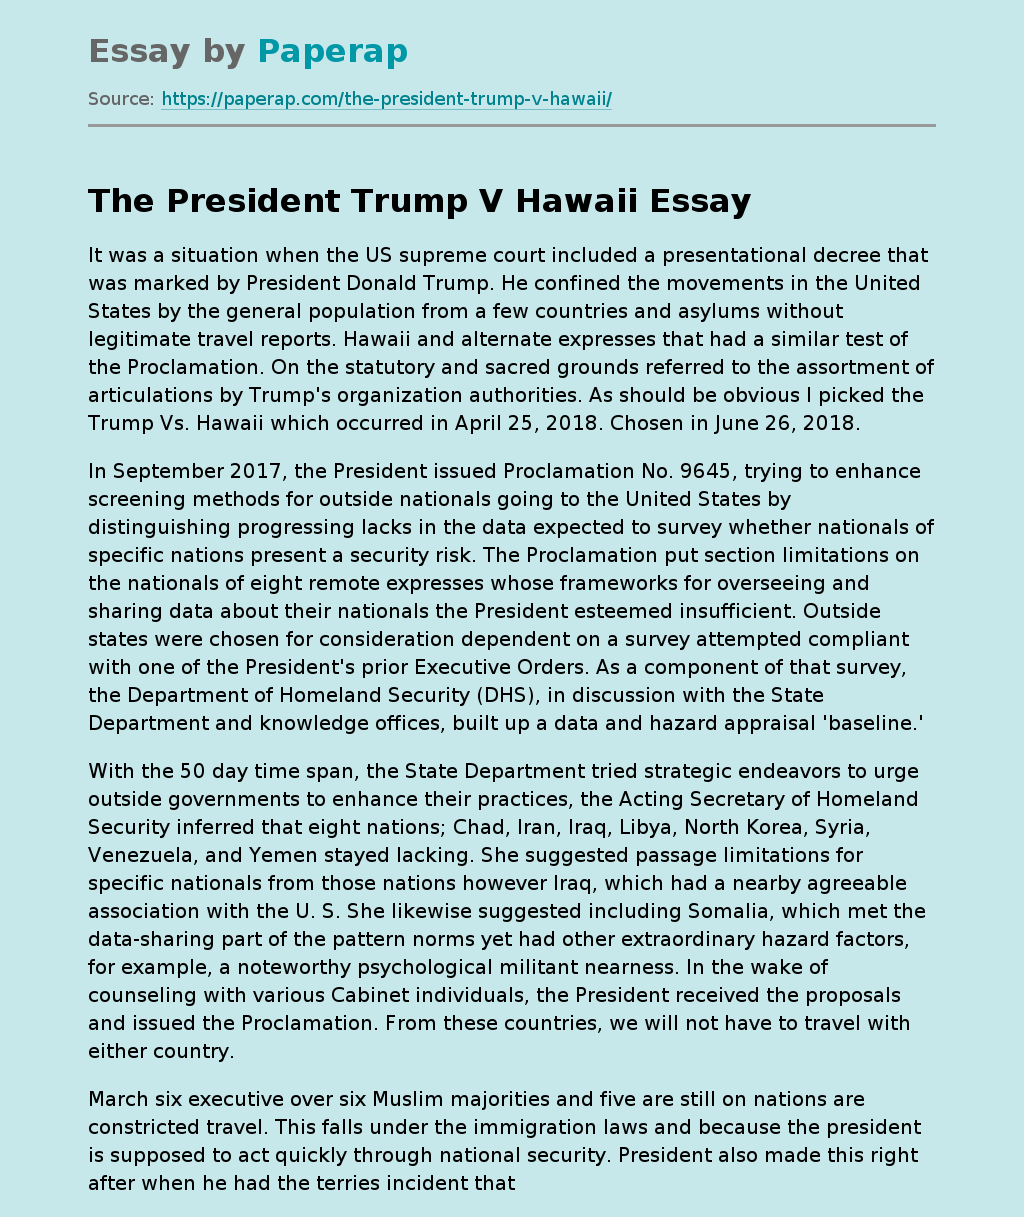 The President Trump V Hawaii